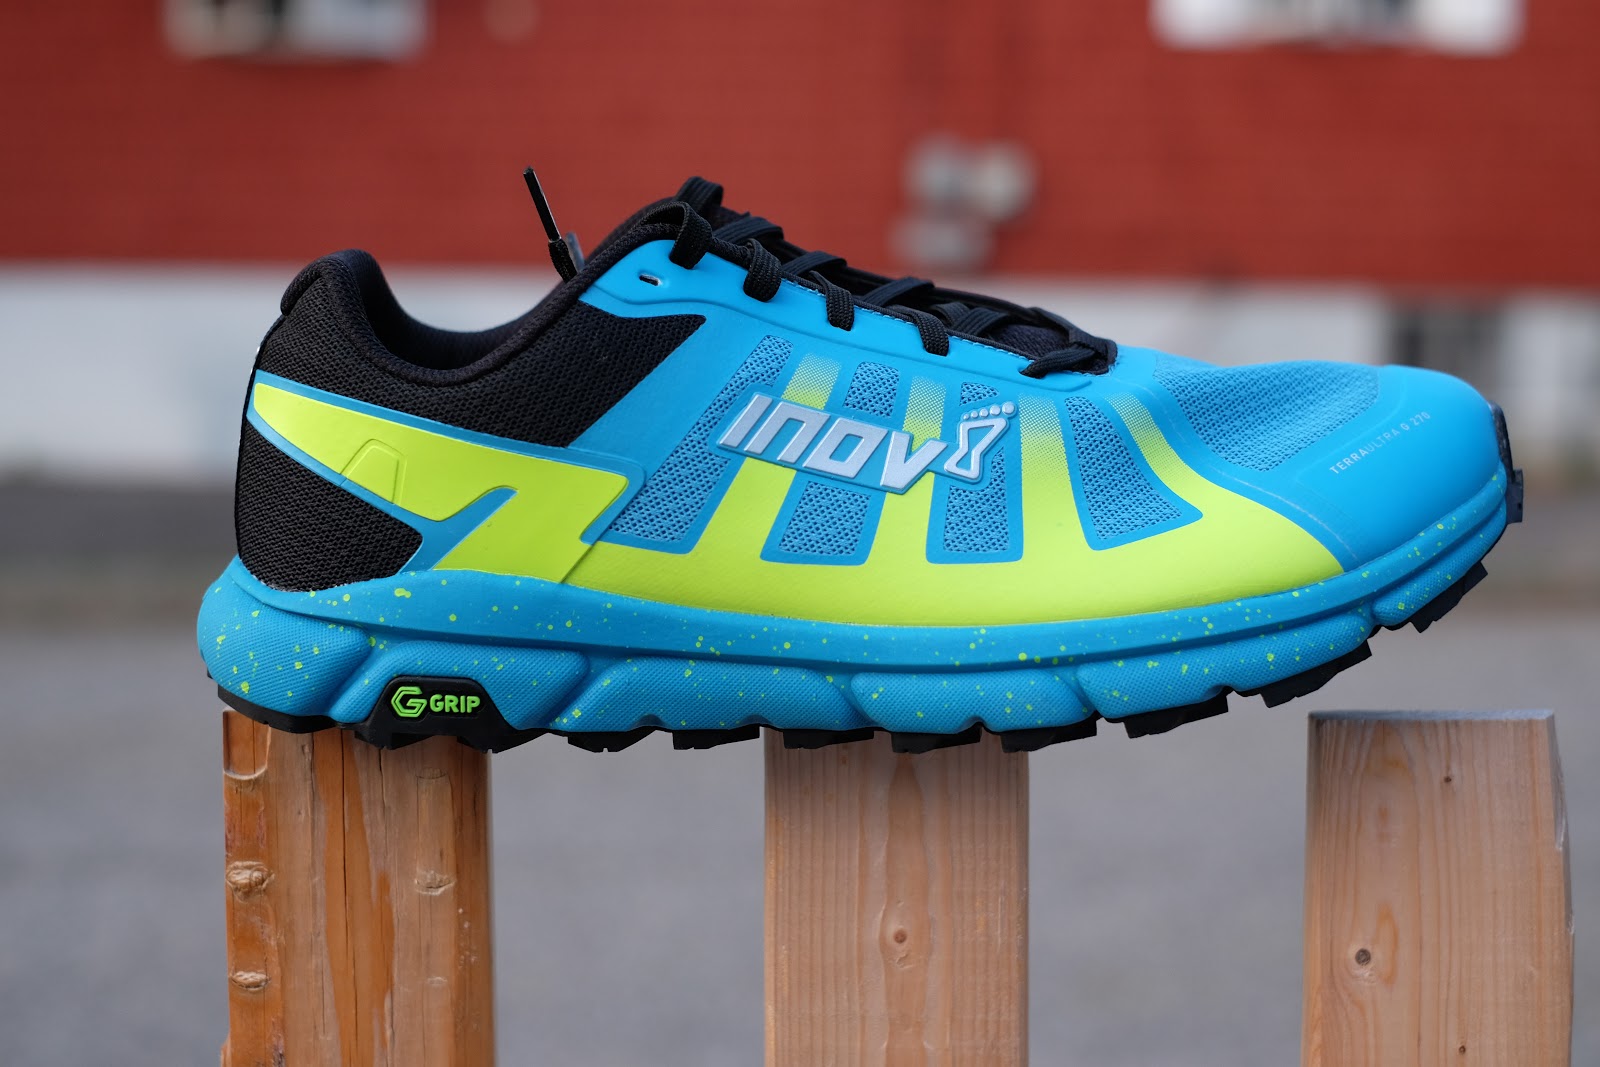 Details about   ALEADER Men's Minimalist Trail Running Shoes BarefootWide ToeZero Drop 